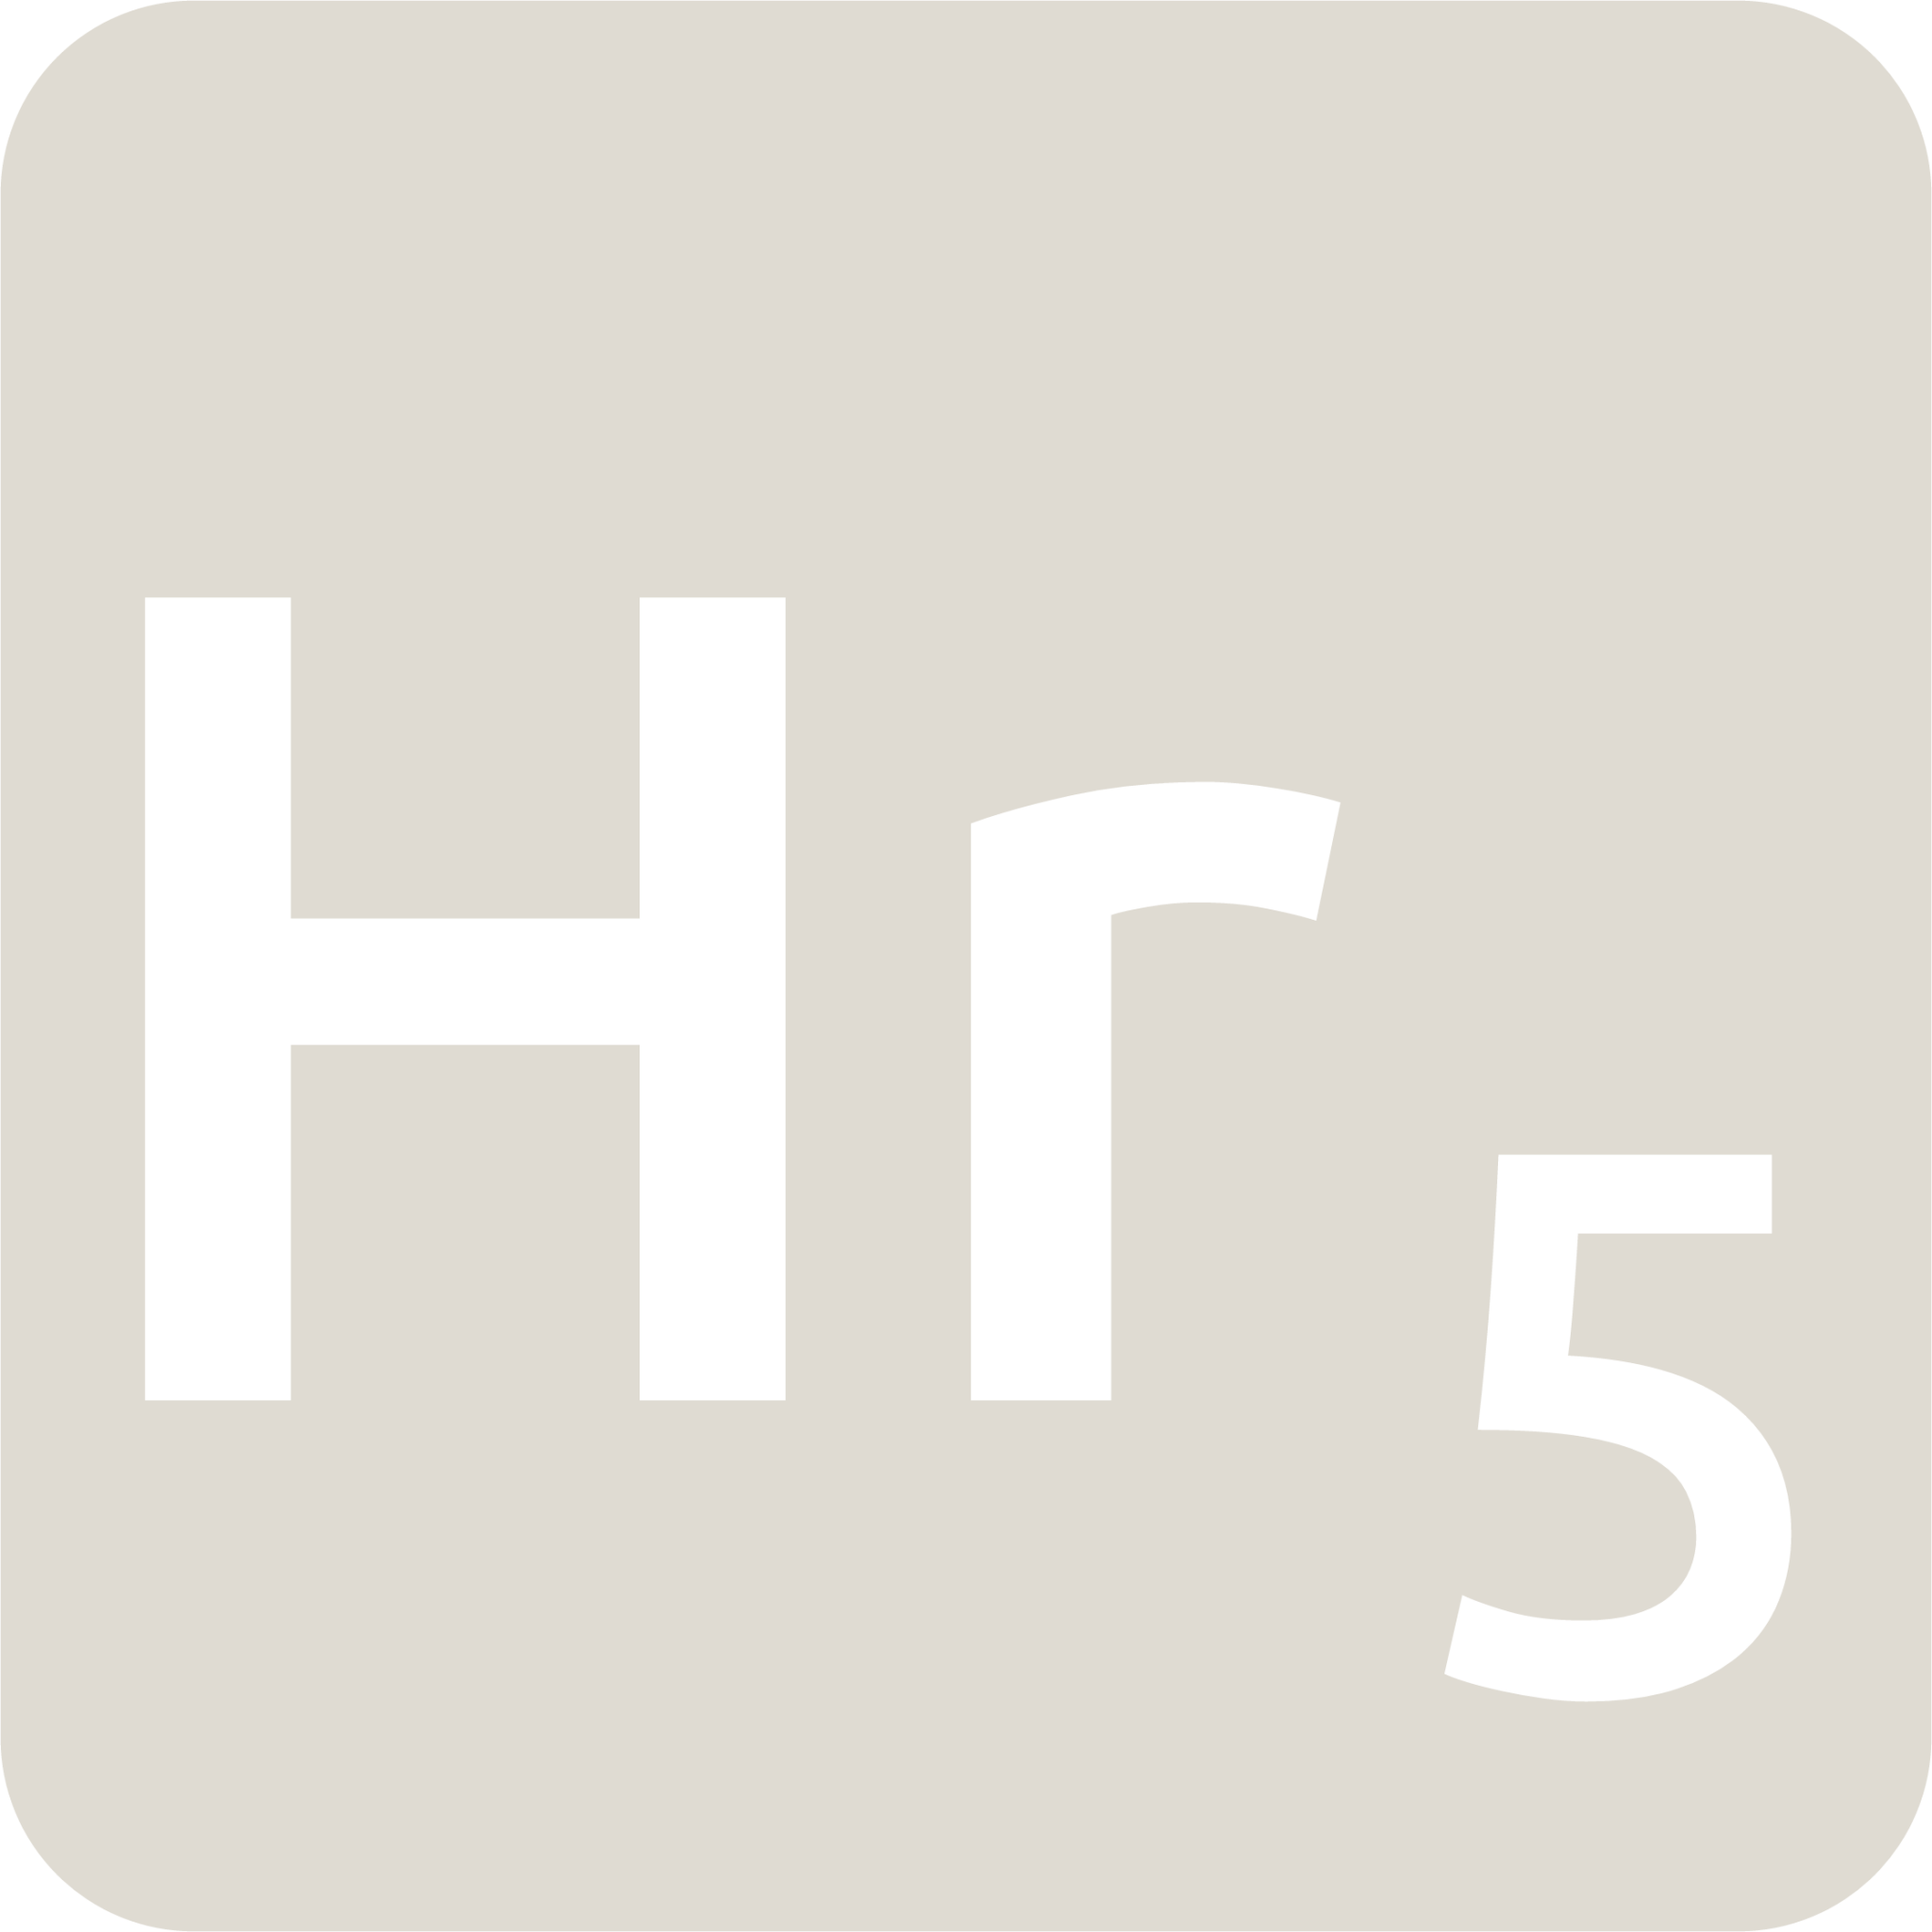 indicator keyboard Hr 5 icon